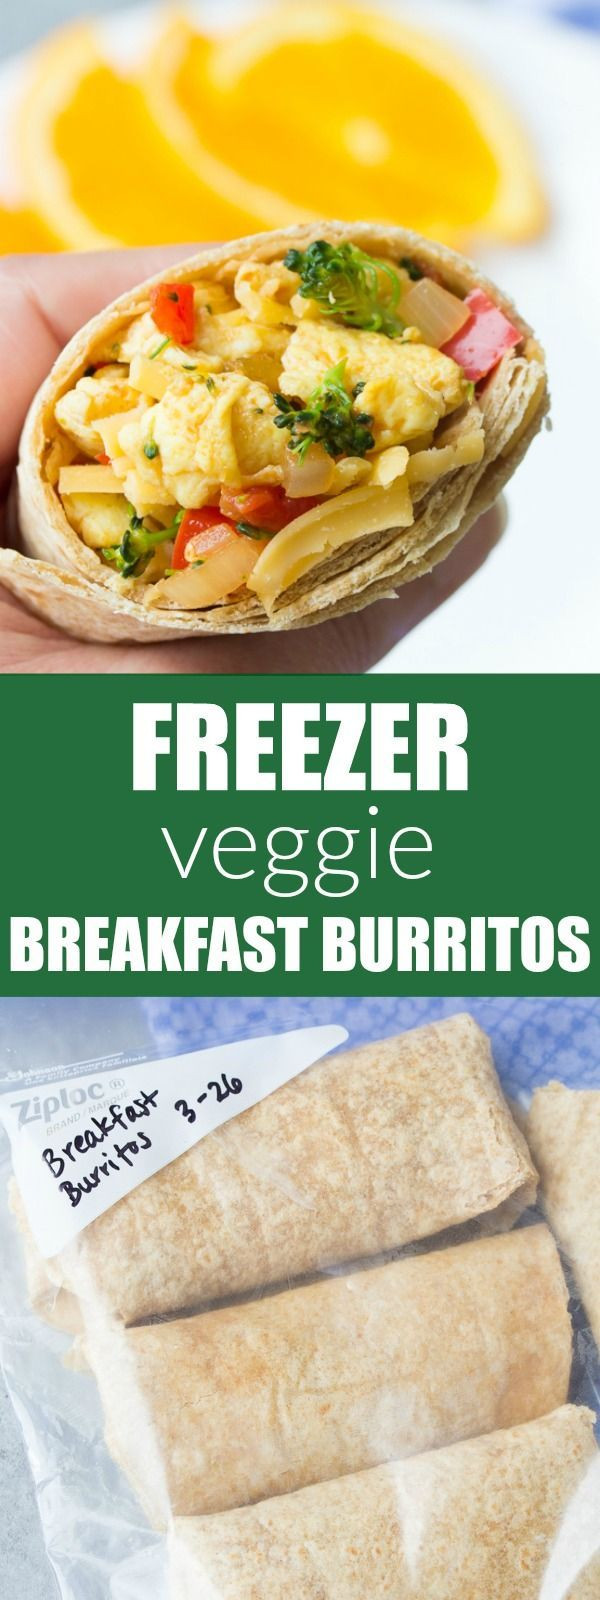 Healthy Breakfast Burrito Freezer
 Healthy Freezer Ve able Breakfast Burritos that you can